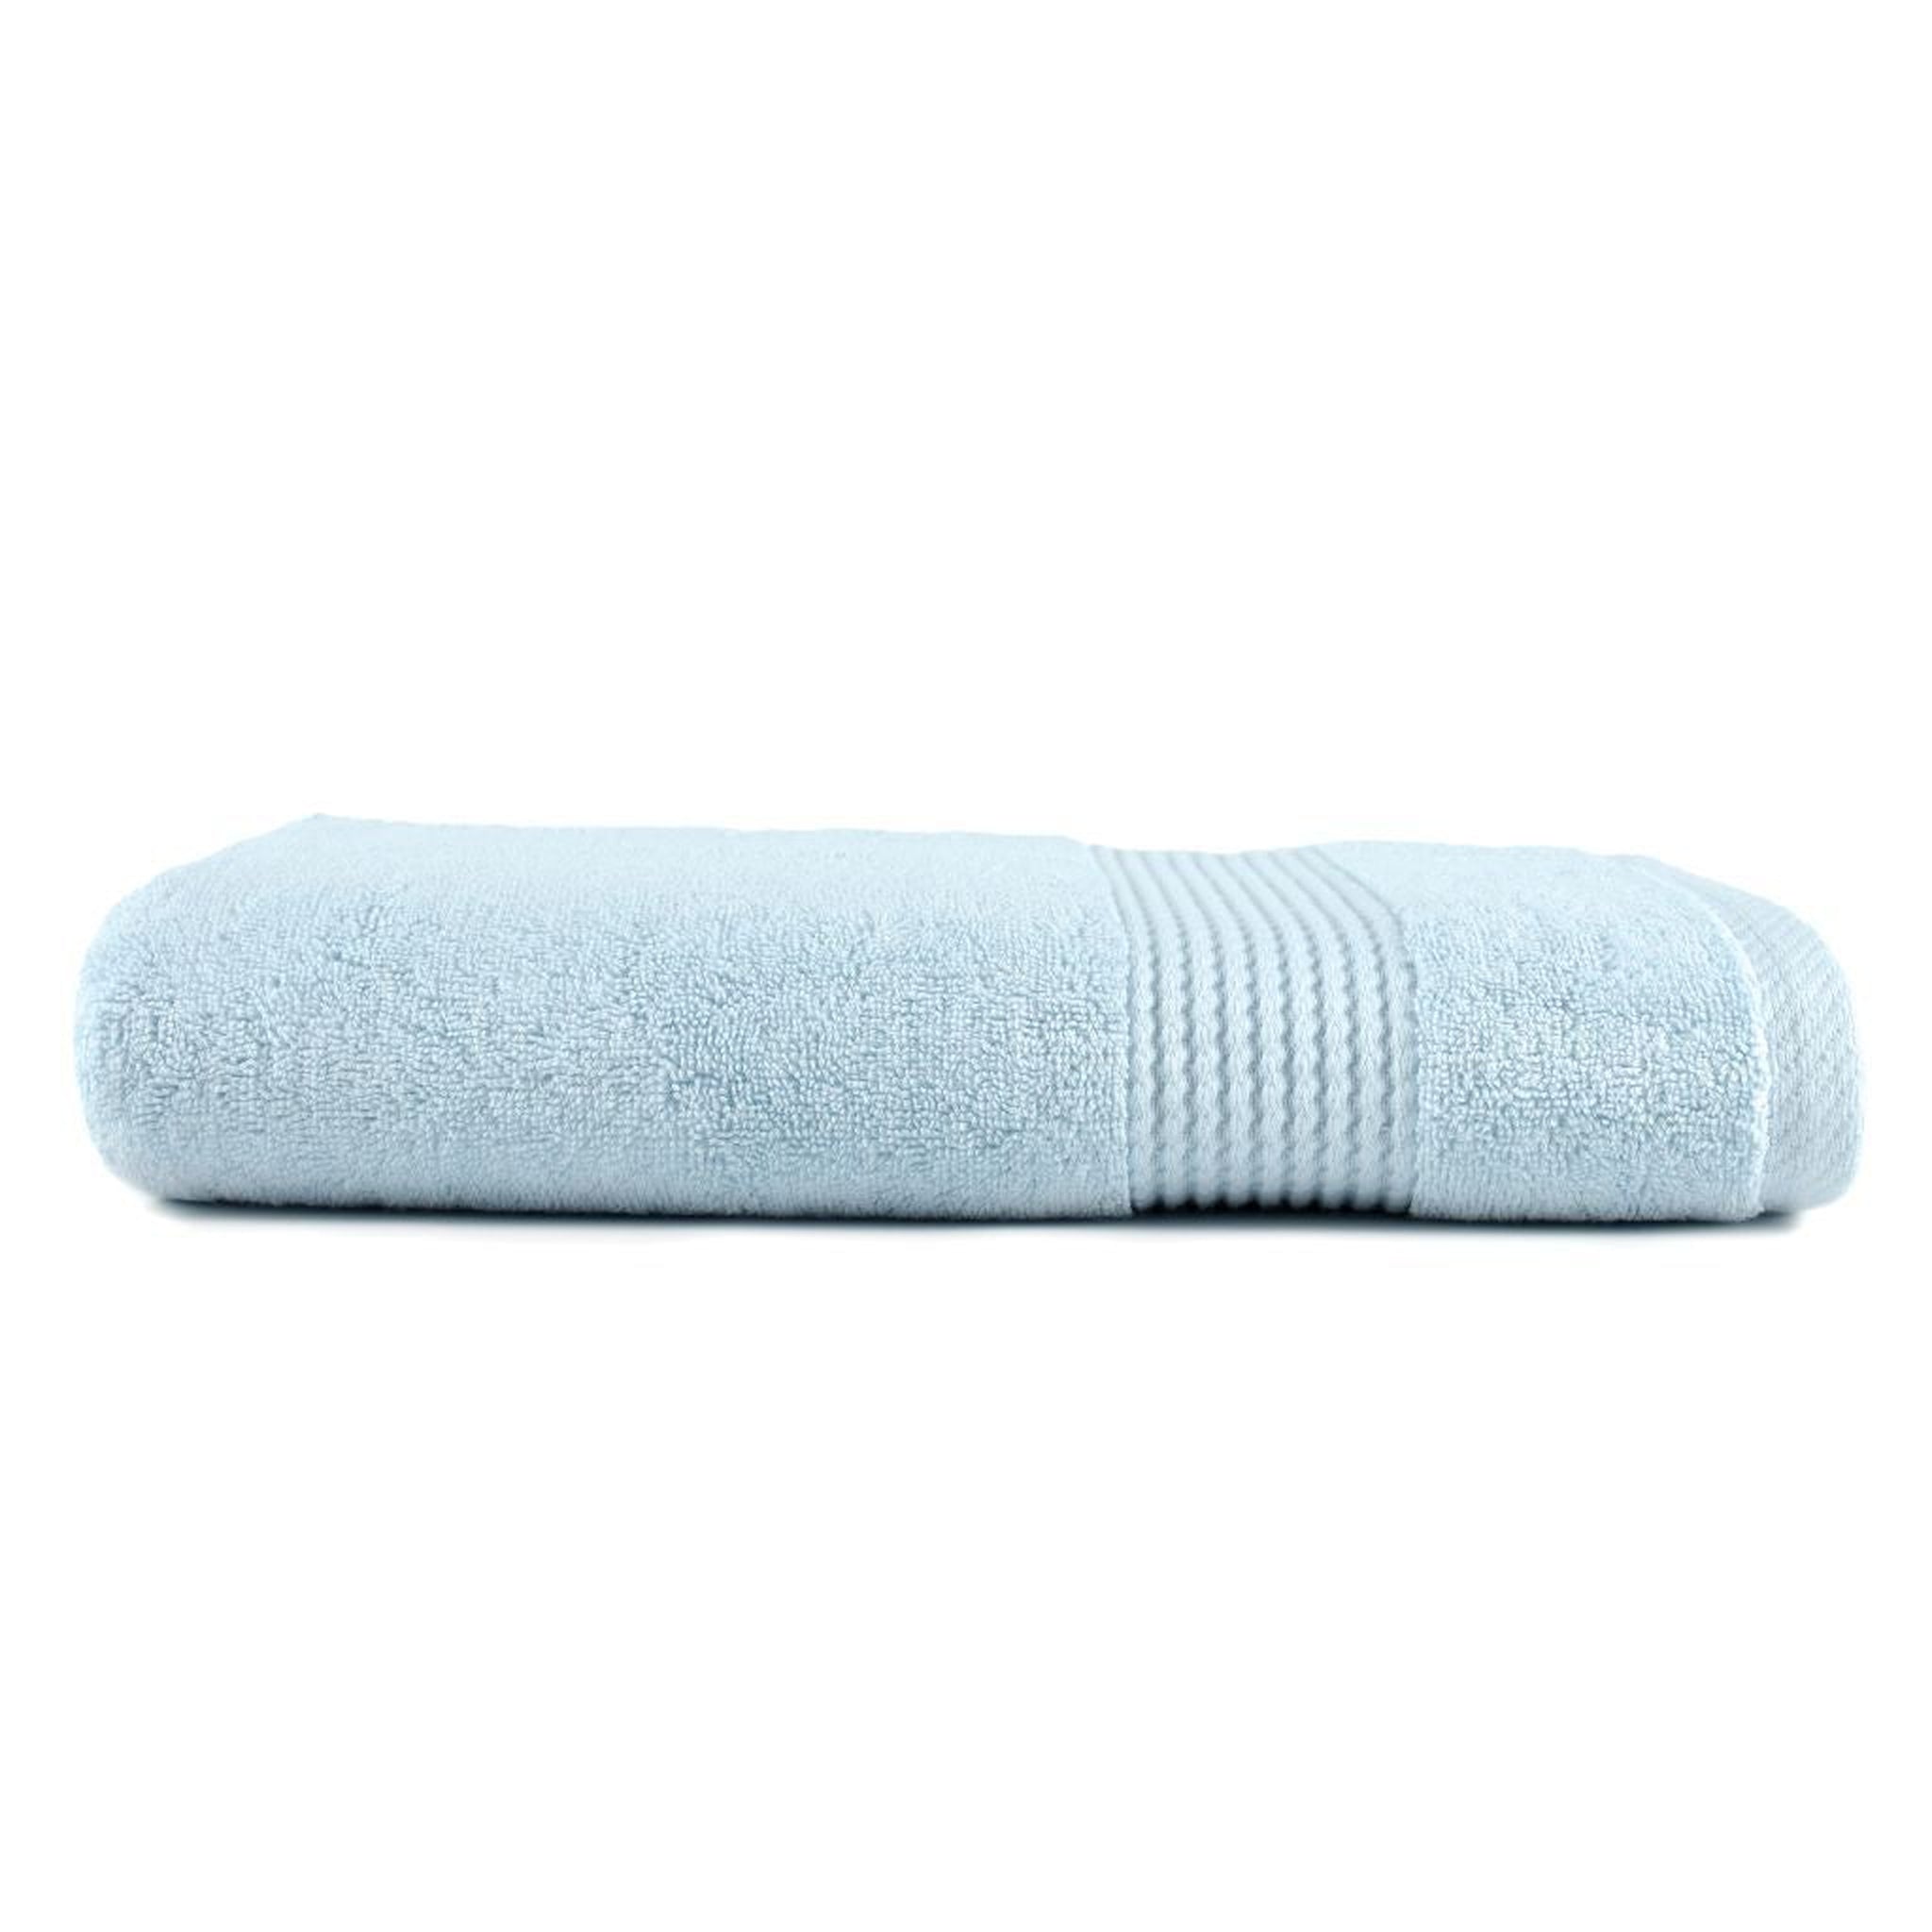 East`N Blue, East`N Blue Lara Turkish Cotton Ice Blue Bath Towel